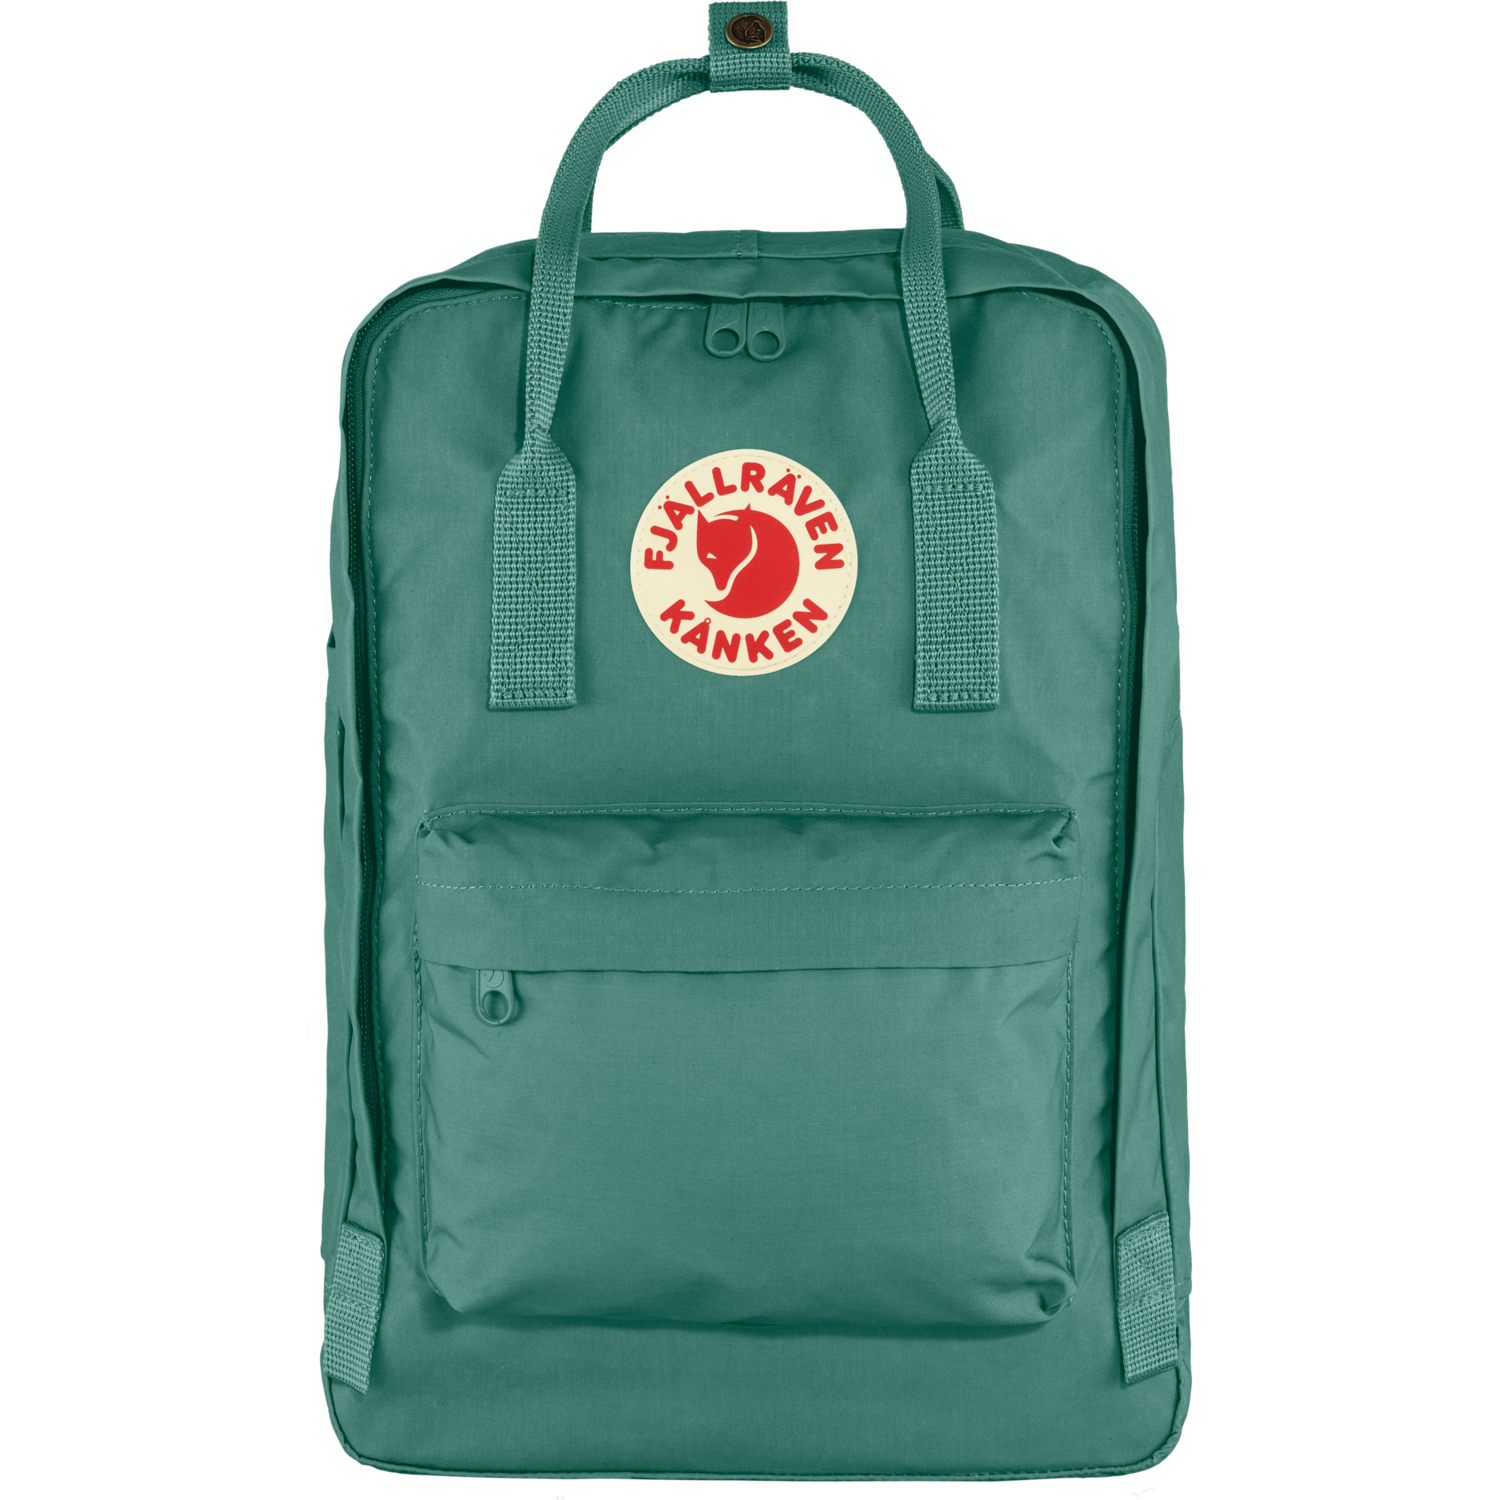 green kanken laptop backpack